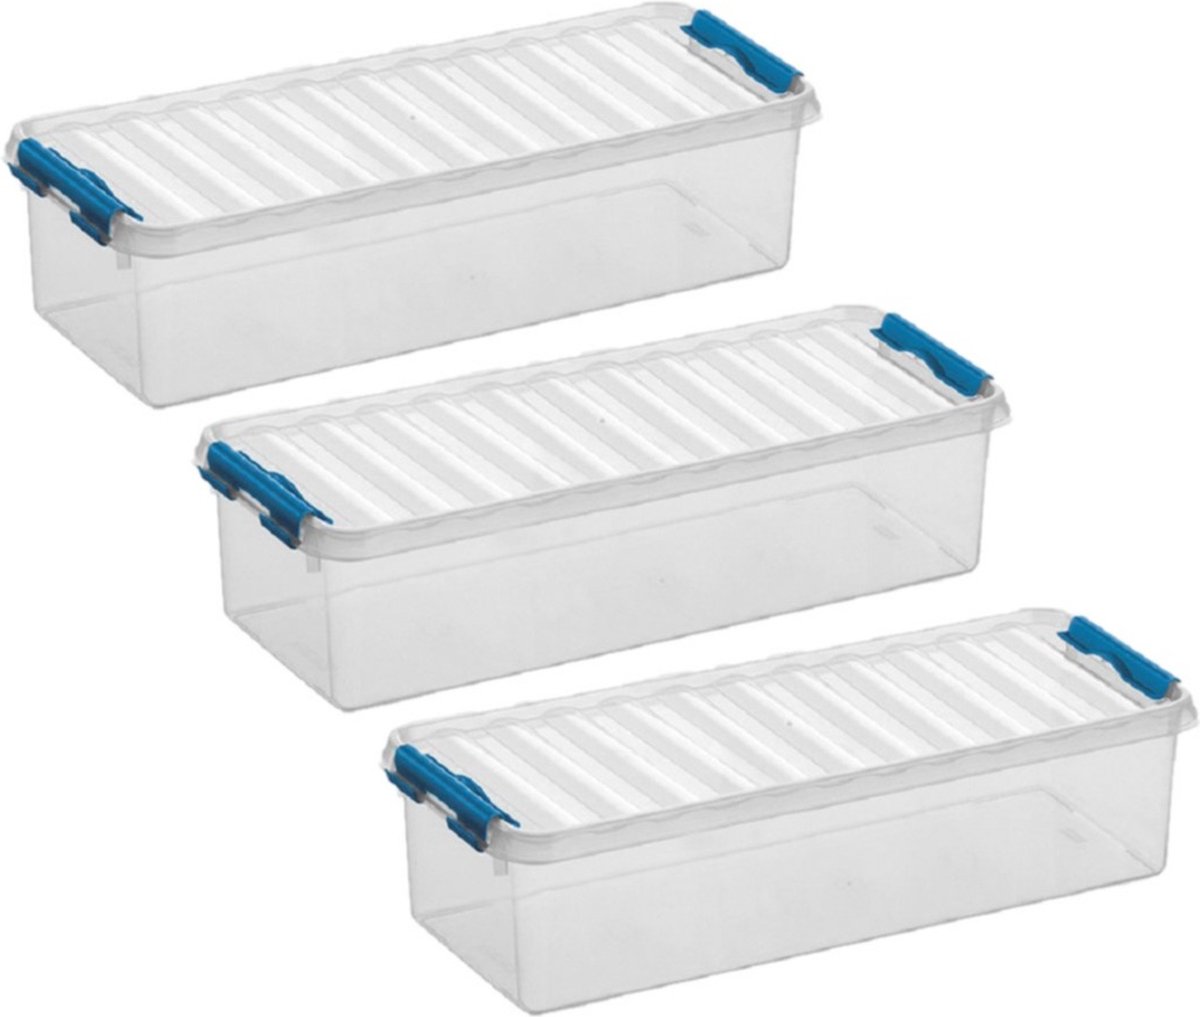 6x stuks opberg box/opbergdoos 3.5 liter 38.5 x 14 x 9.2 cm - Opslagbox - Opbergbak kunststof transparant/blauw